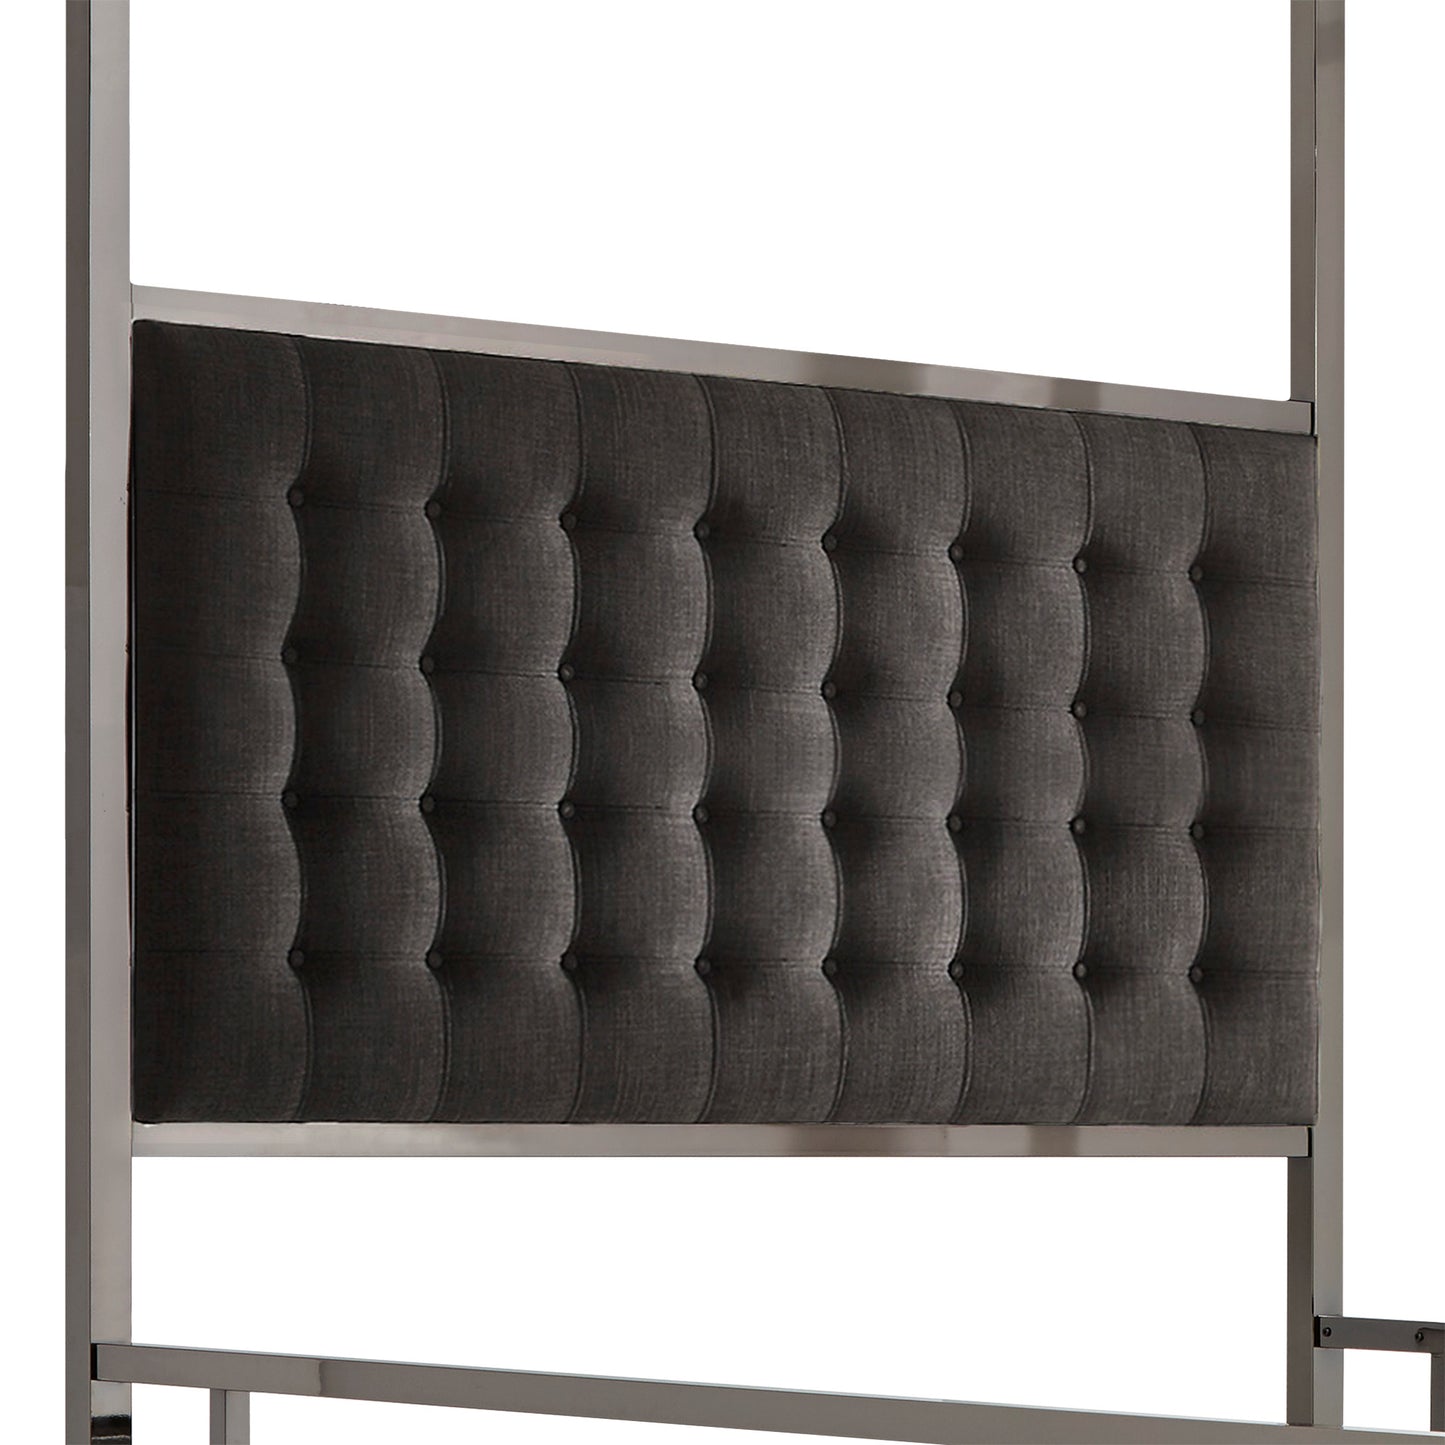 Metal Canopy Bed with Upholstered Headboard - Dark Grey Linen, Black Nickel Finish, Queen Size